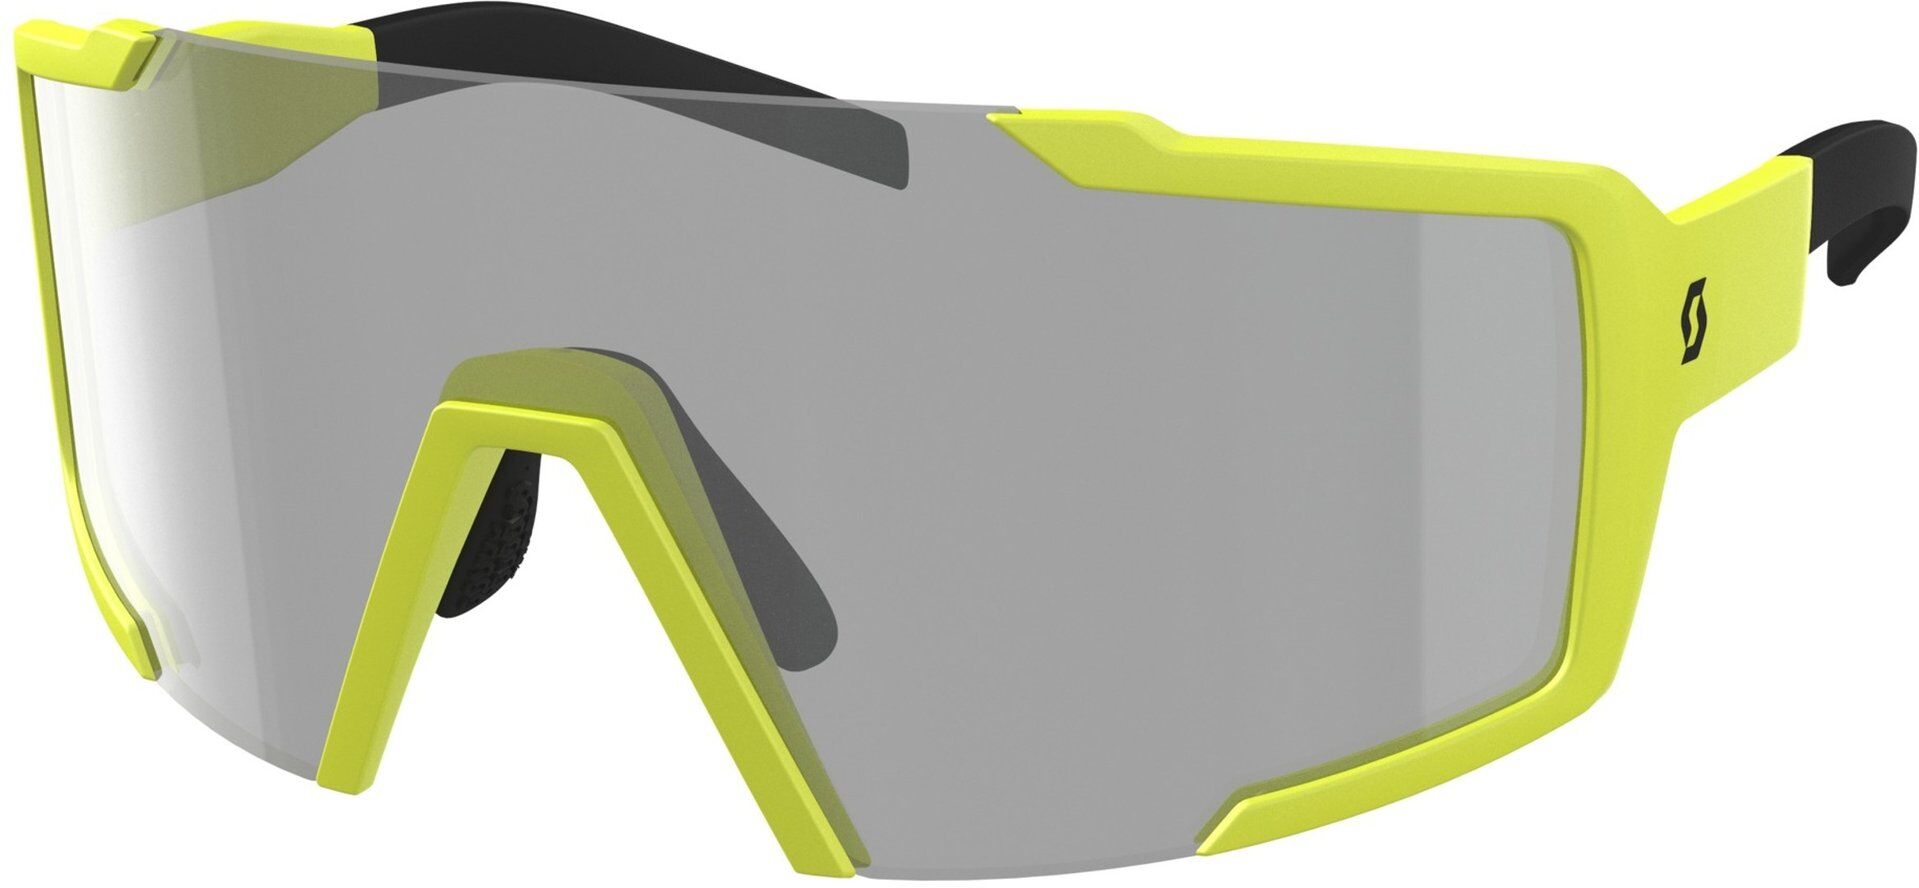 Scott Shield LS Gafas de sol - Gris Amarillo (un tamaño)